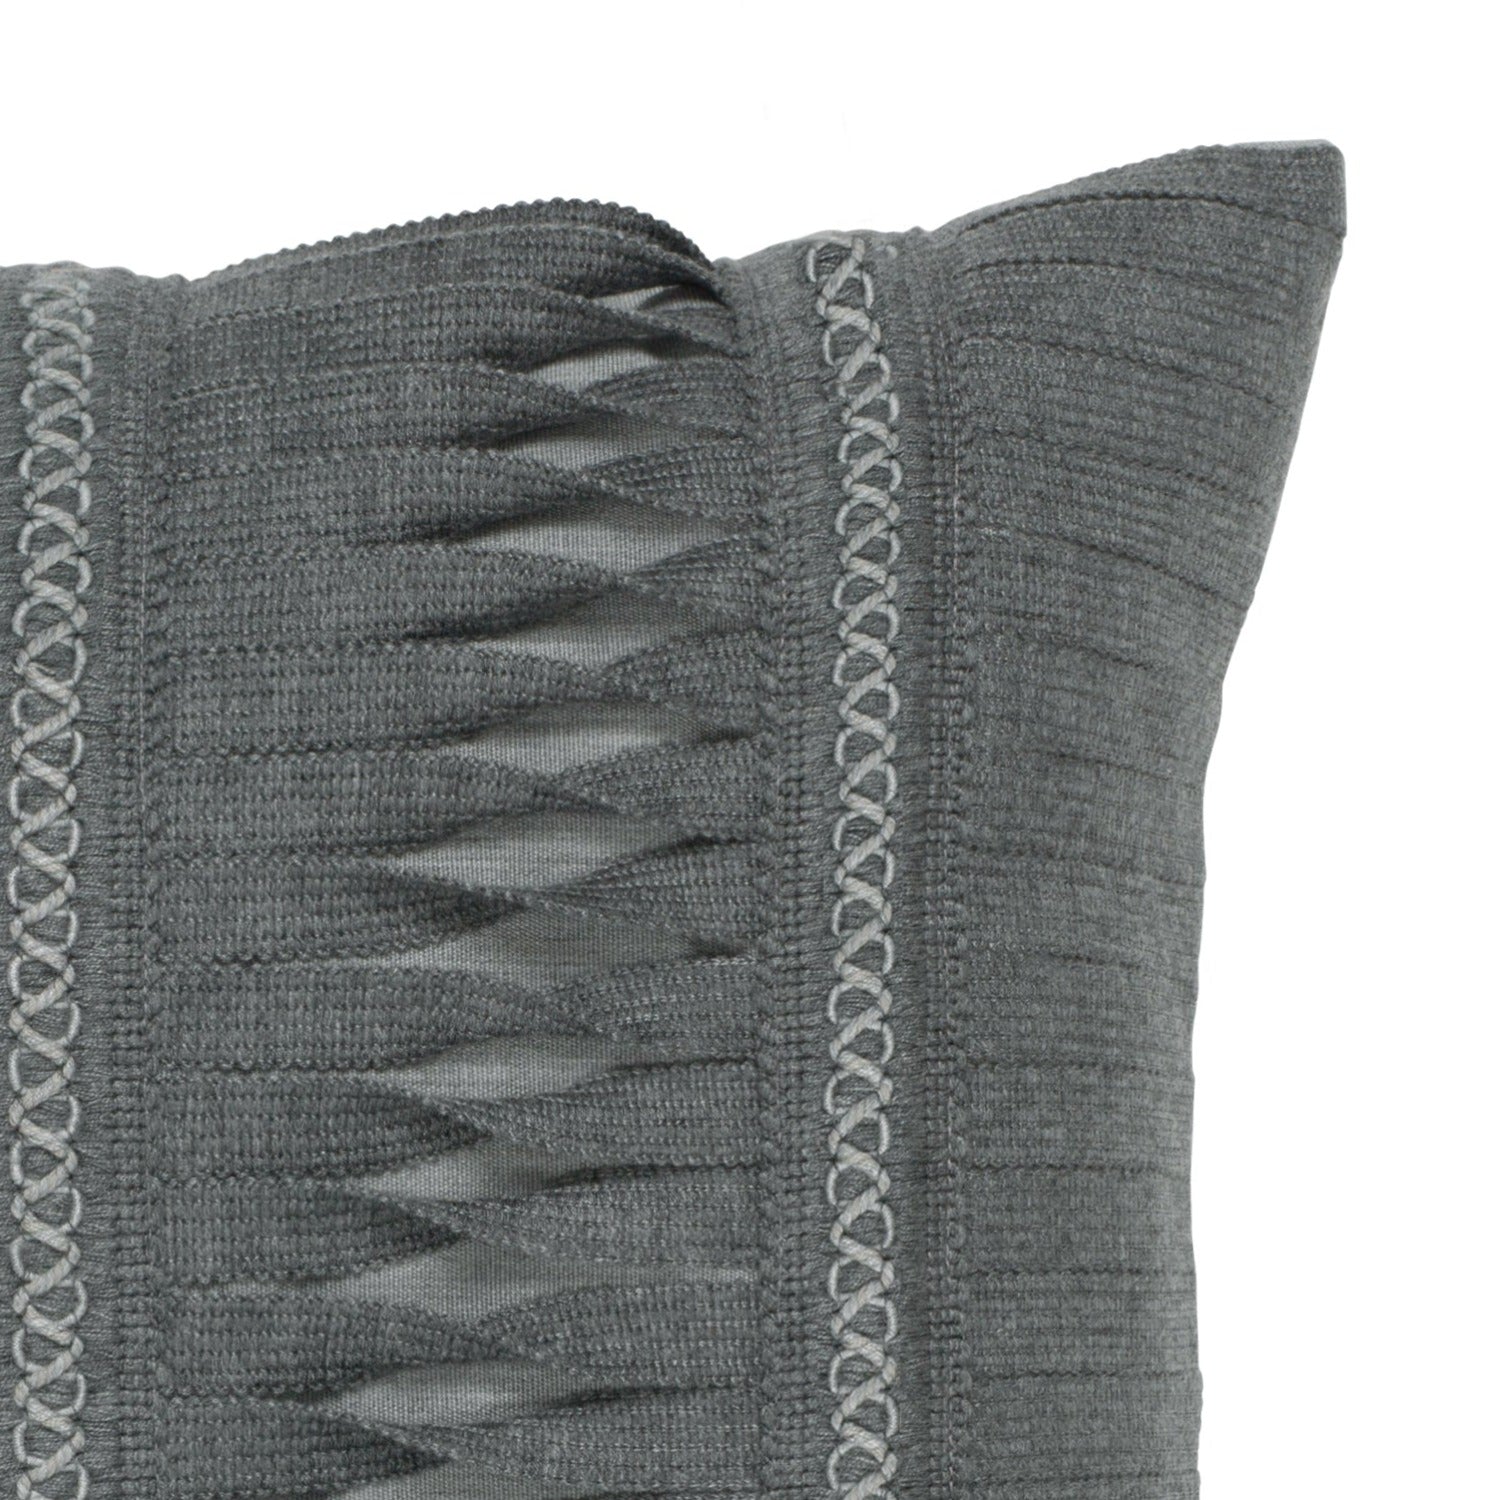 Elaine Smith 20 inch Square Outdoor Pillow - Gladiator Smoke - Polyester Fiber Fill Throw Pillows 12031012